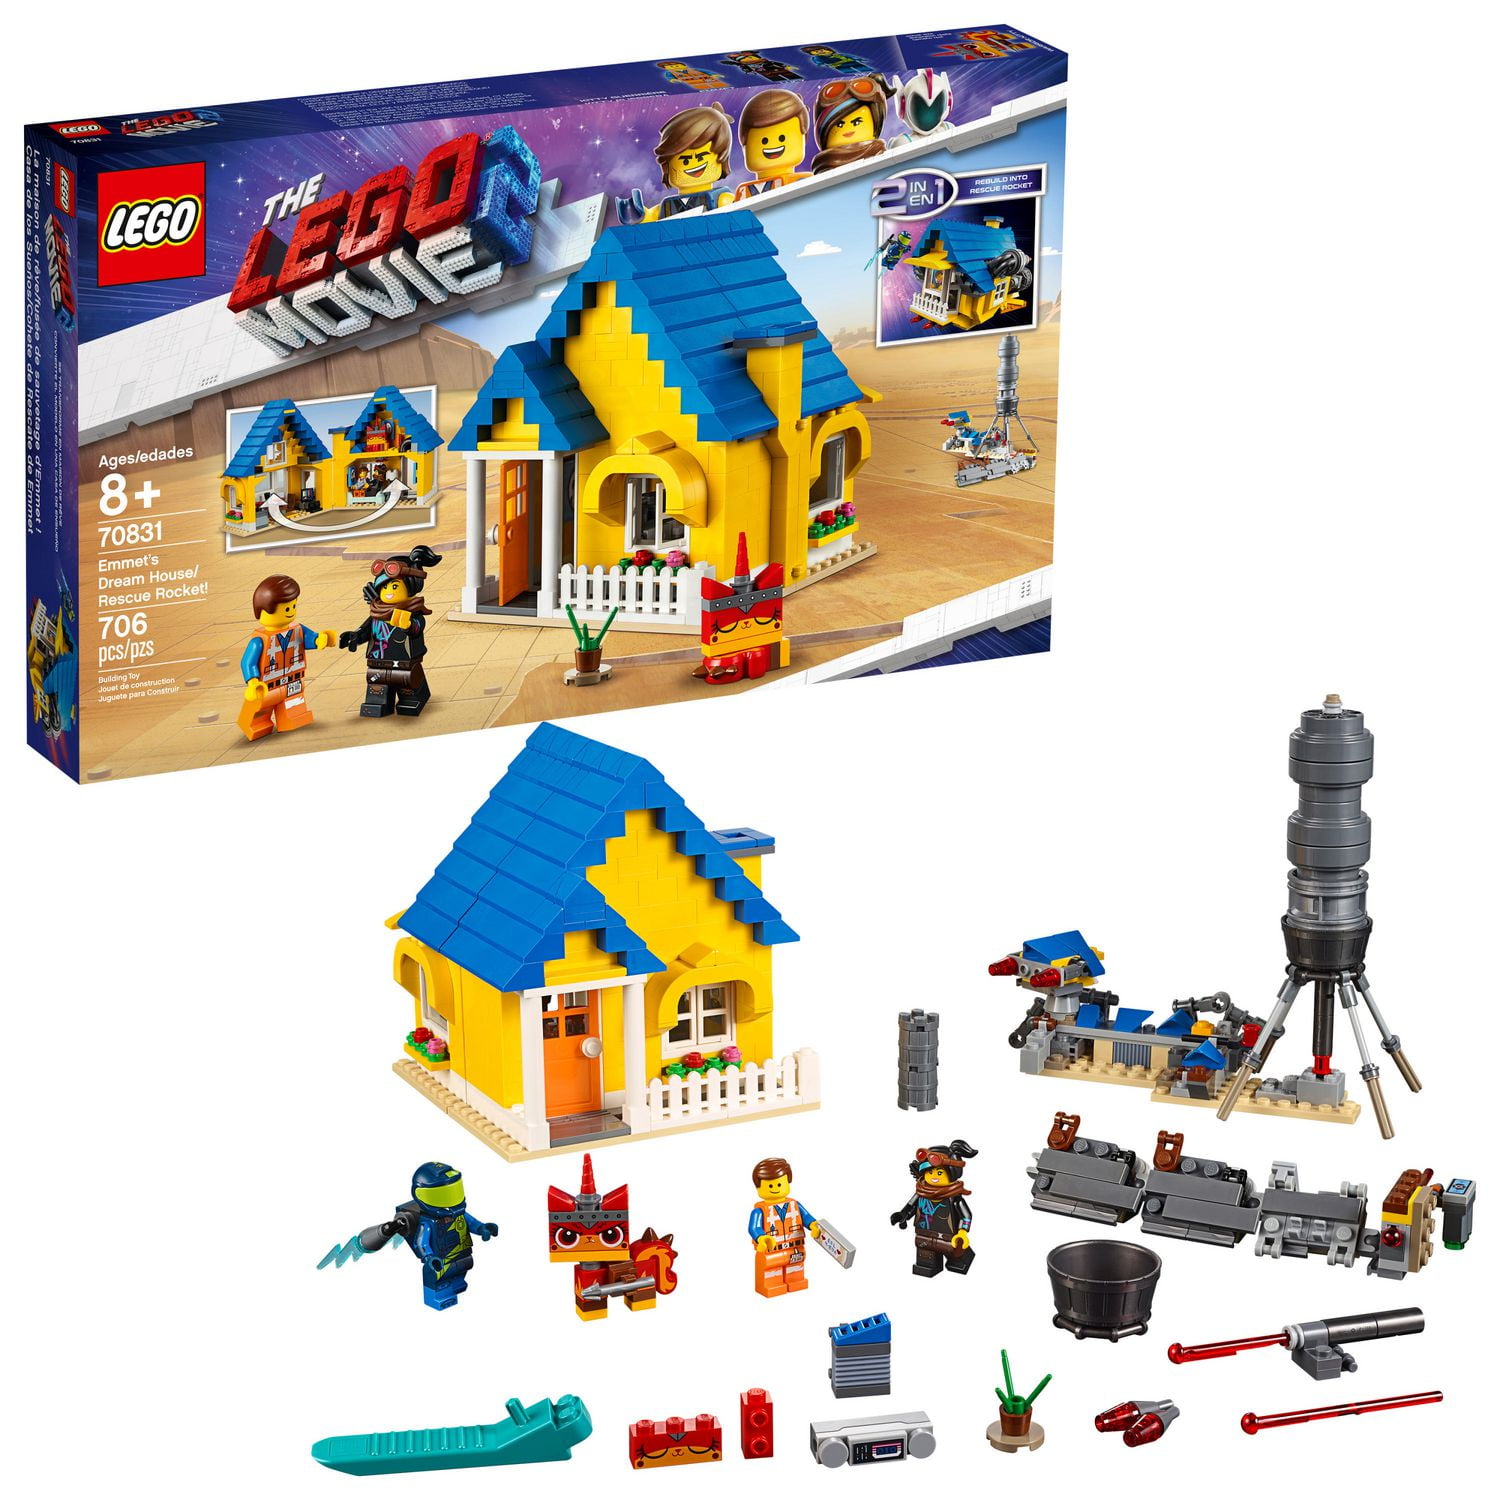 THE LEGO MOVIE 2 Emmet's Dream House/Rescue Rocket! 70831 Building